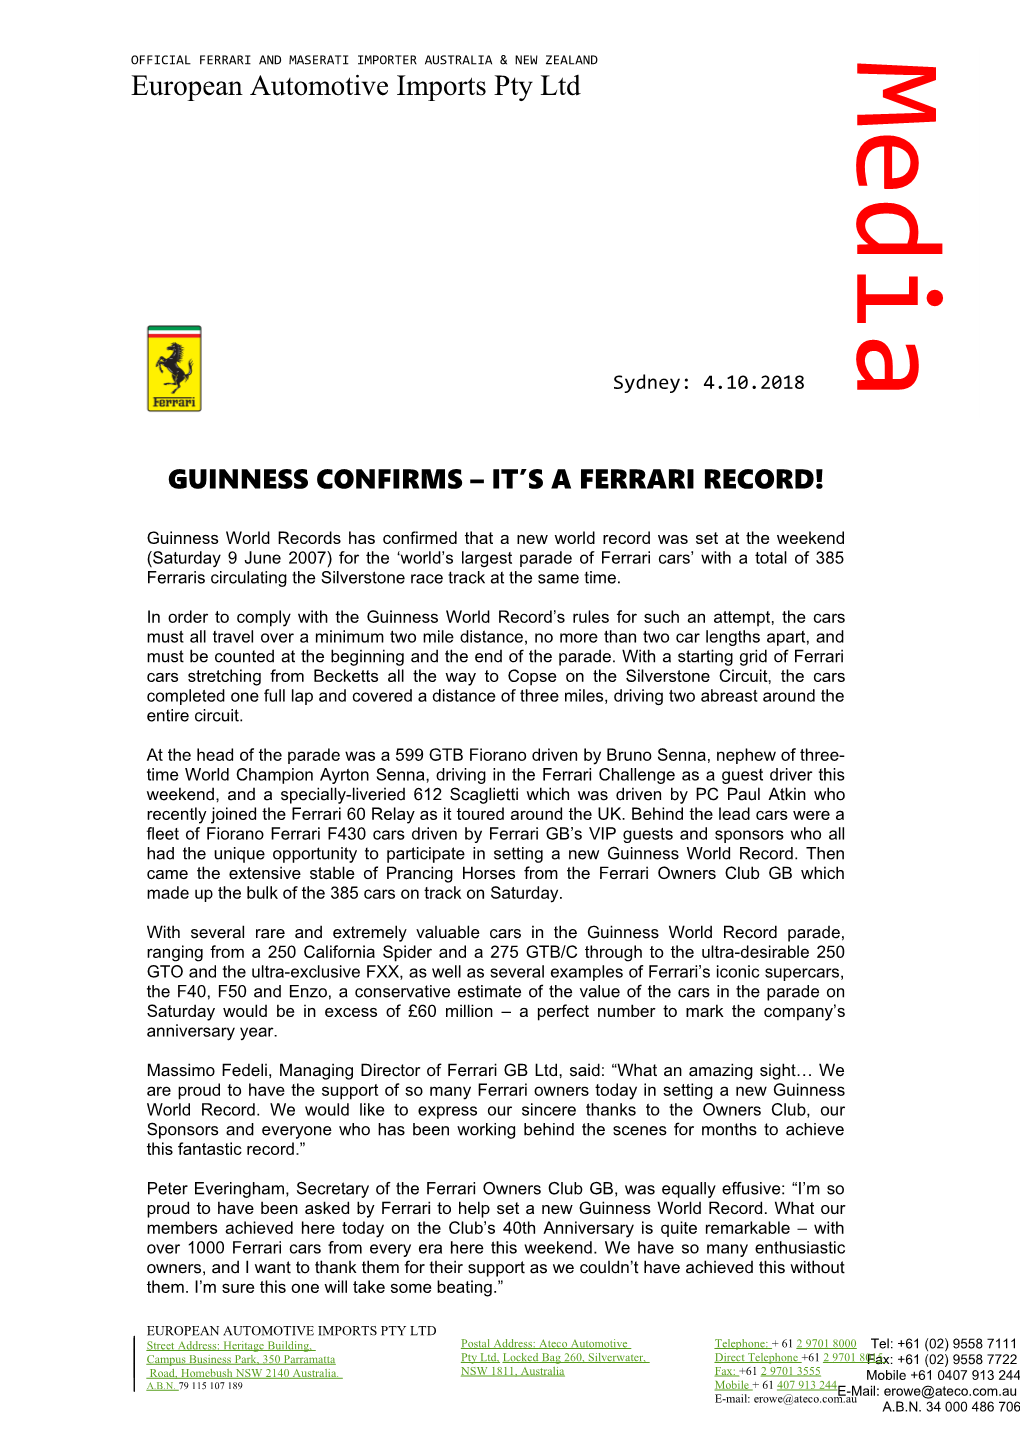 Guinness Confirms It S a Ferrari Record!